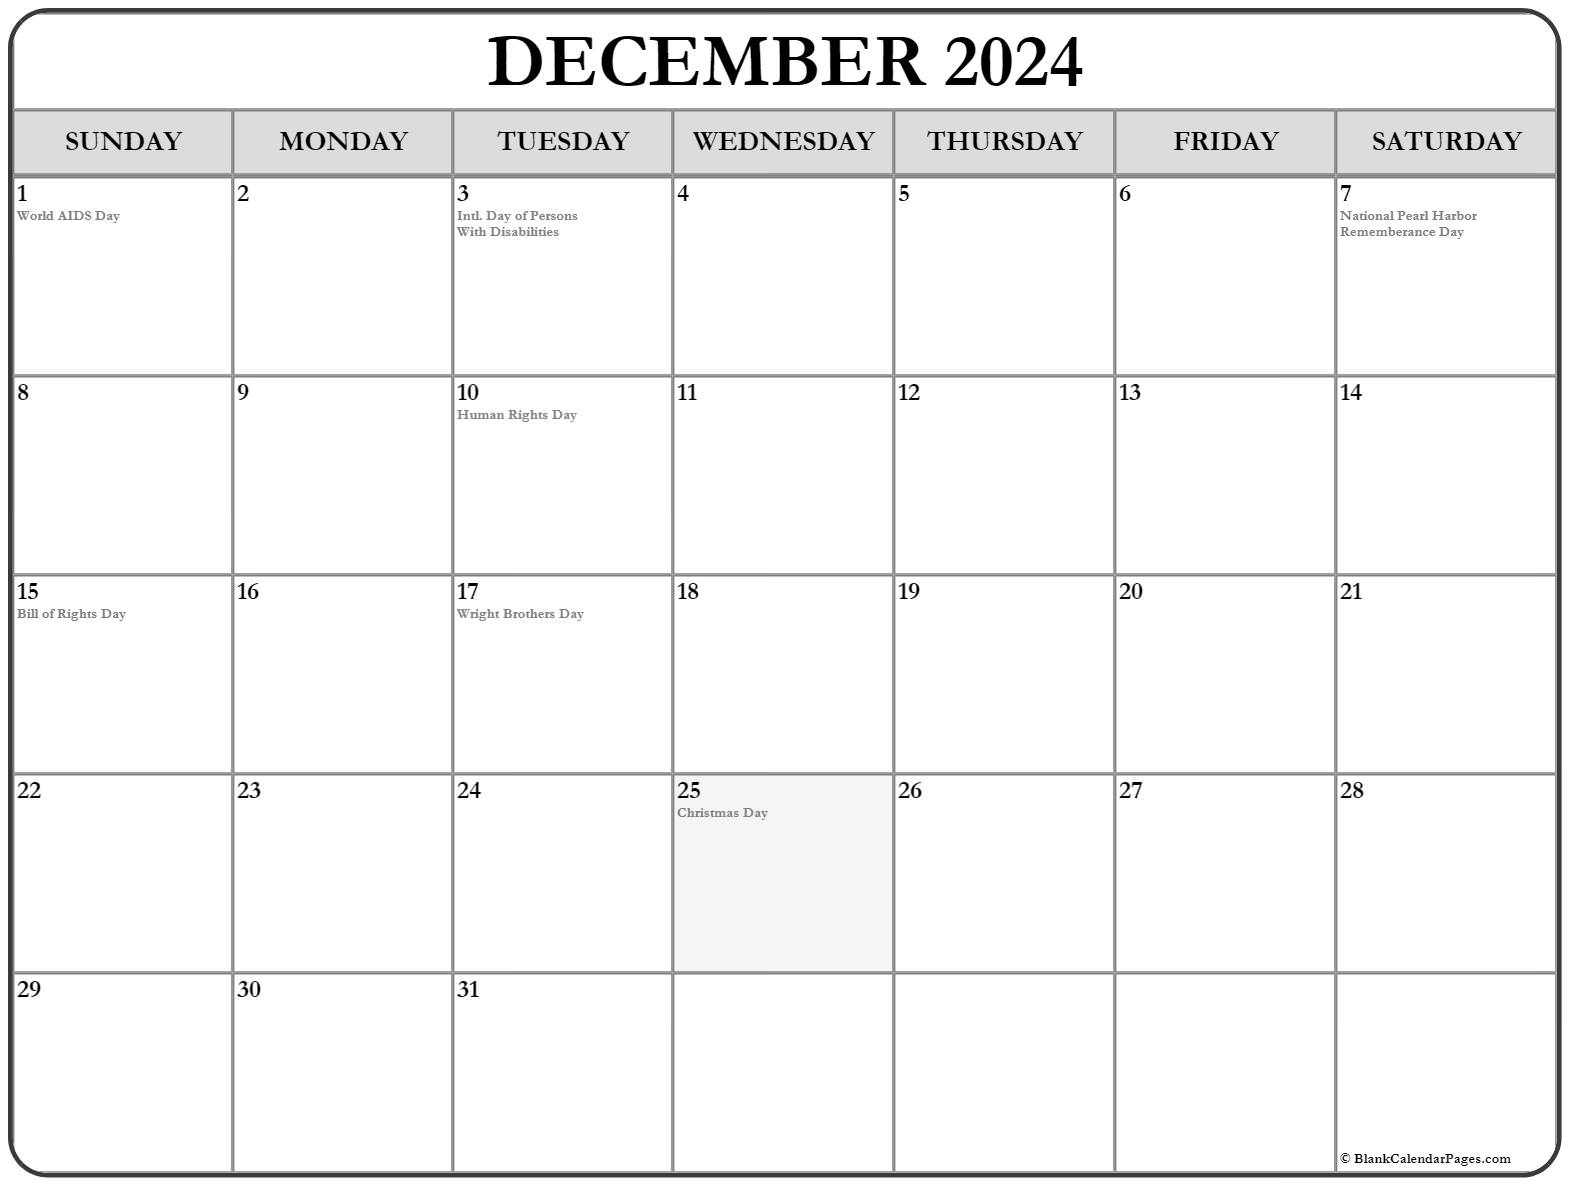 calendar december 2022 with holidays